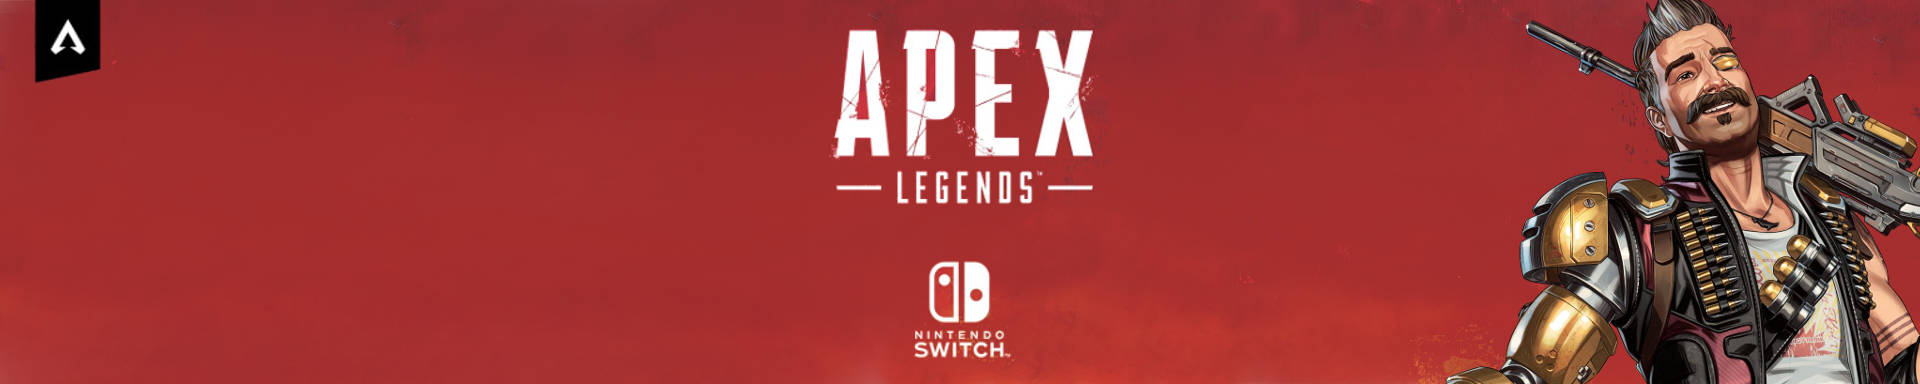 Apex Legends Nintendo Switch release date slice